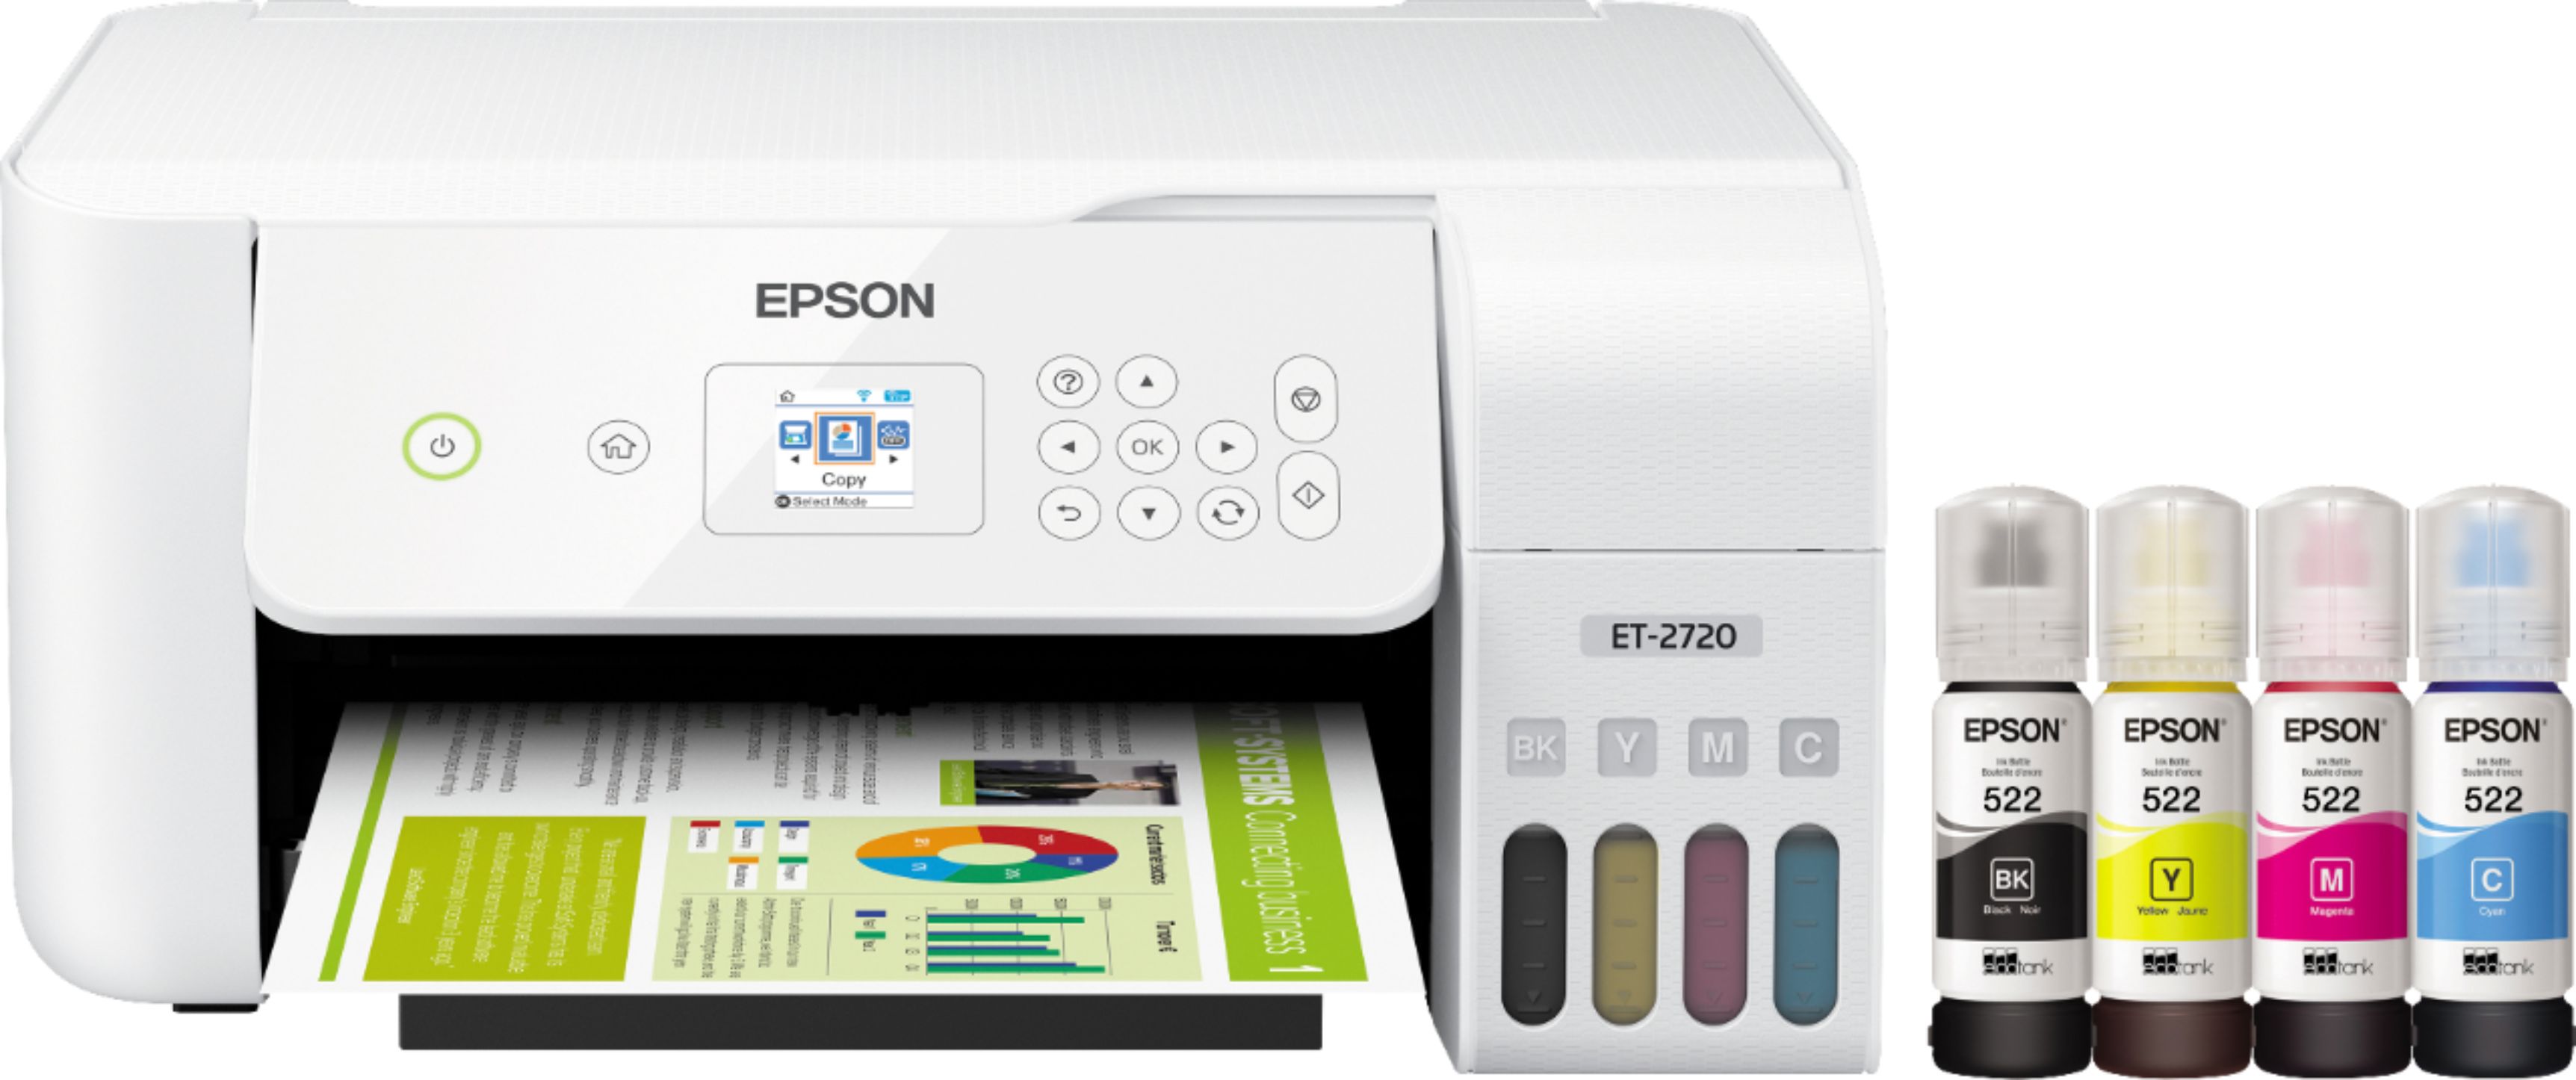  Epson  EcoTank ET  2720  Wireless All In One Printer ECOTANK 